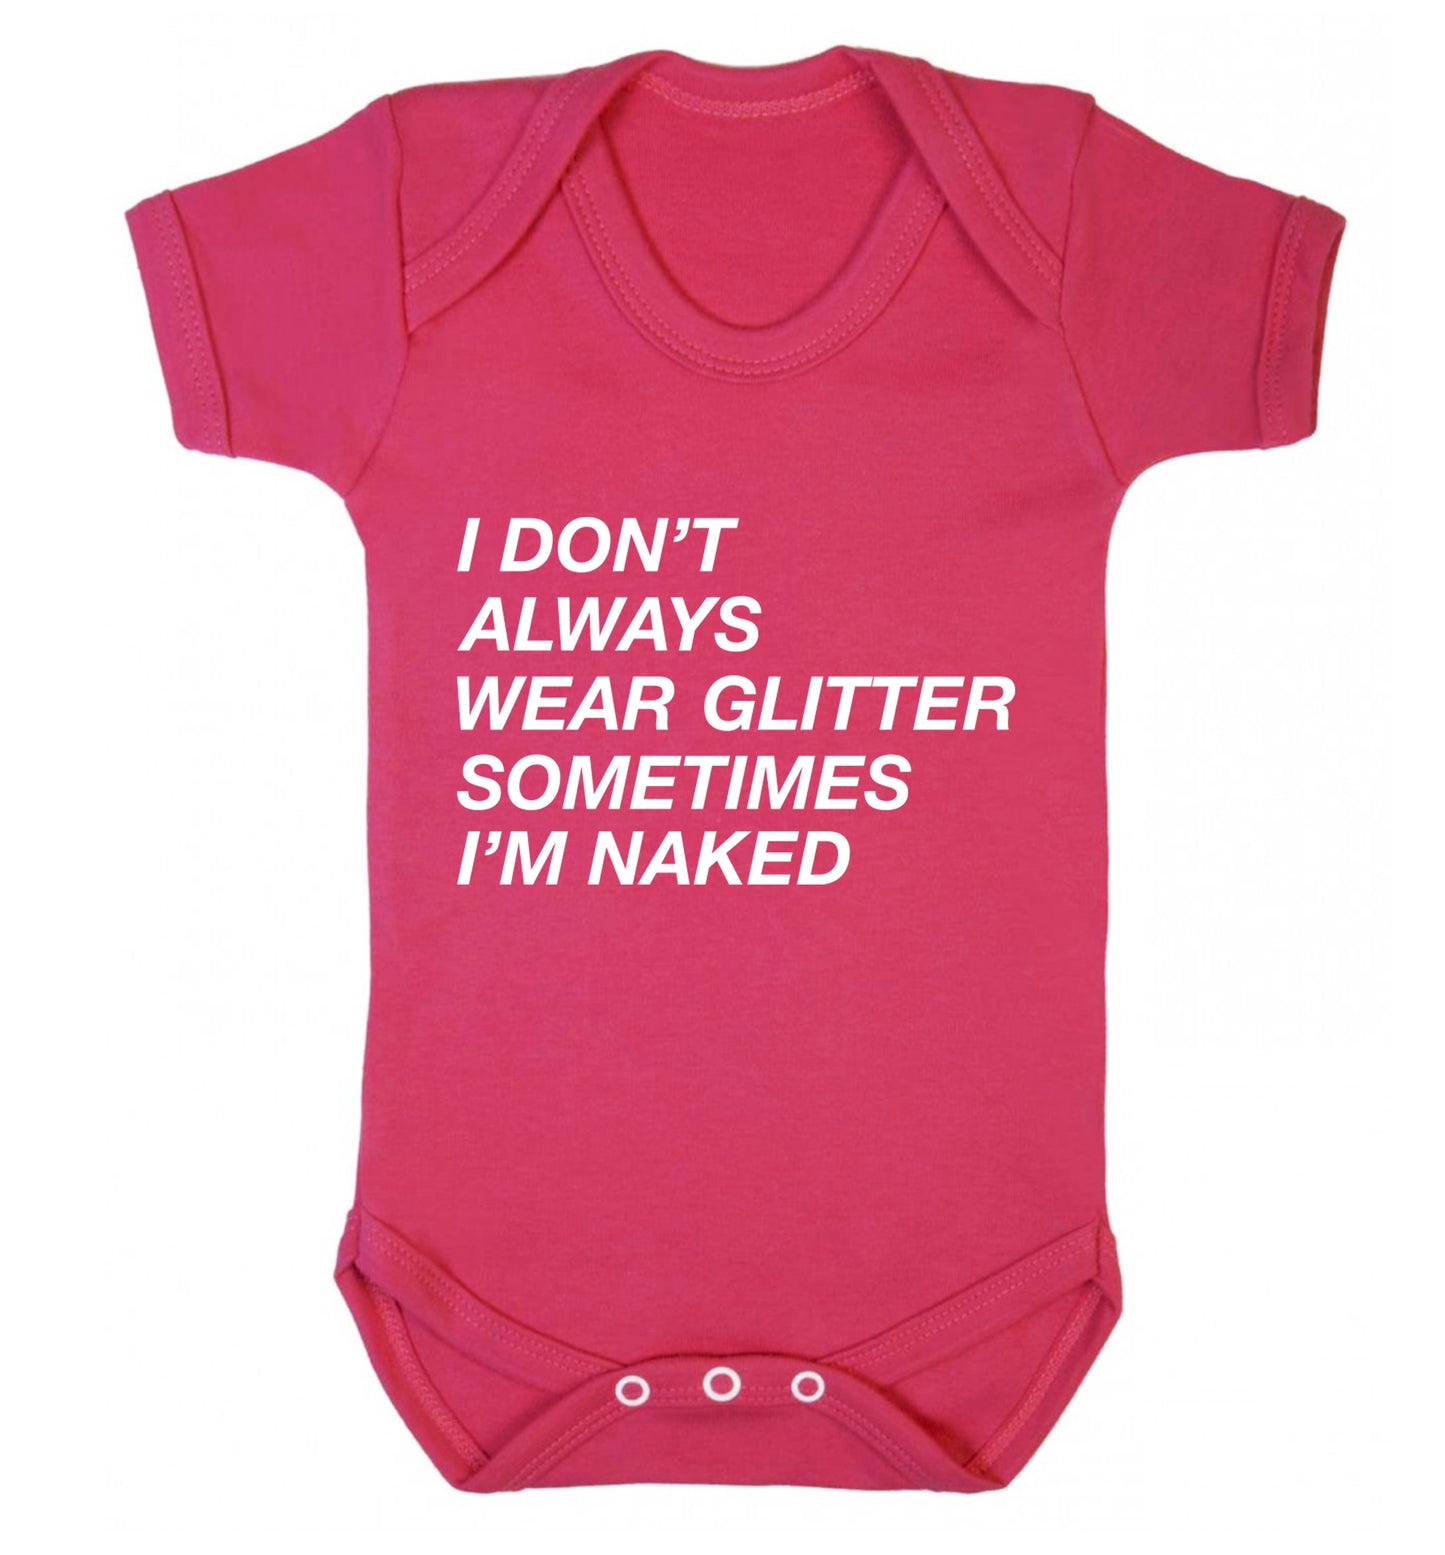 I don't always wear glitter sometimes I'm naked! Baby Vest dark pink 18-24 months